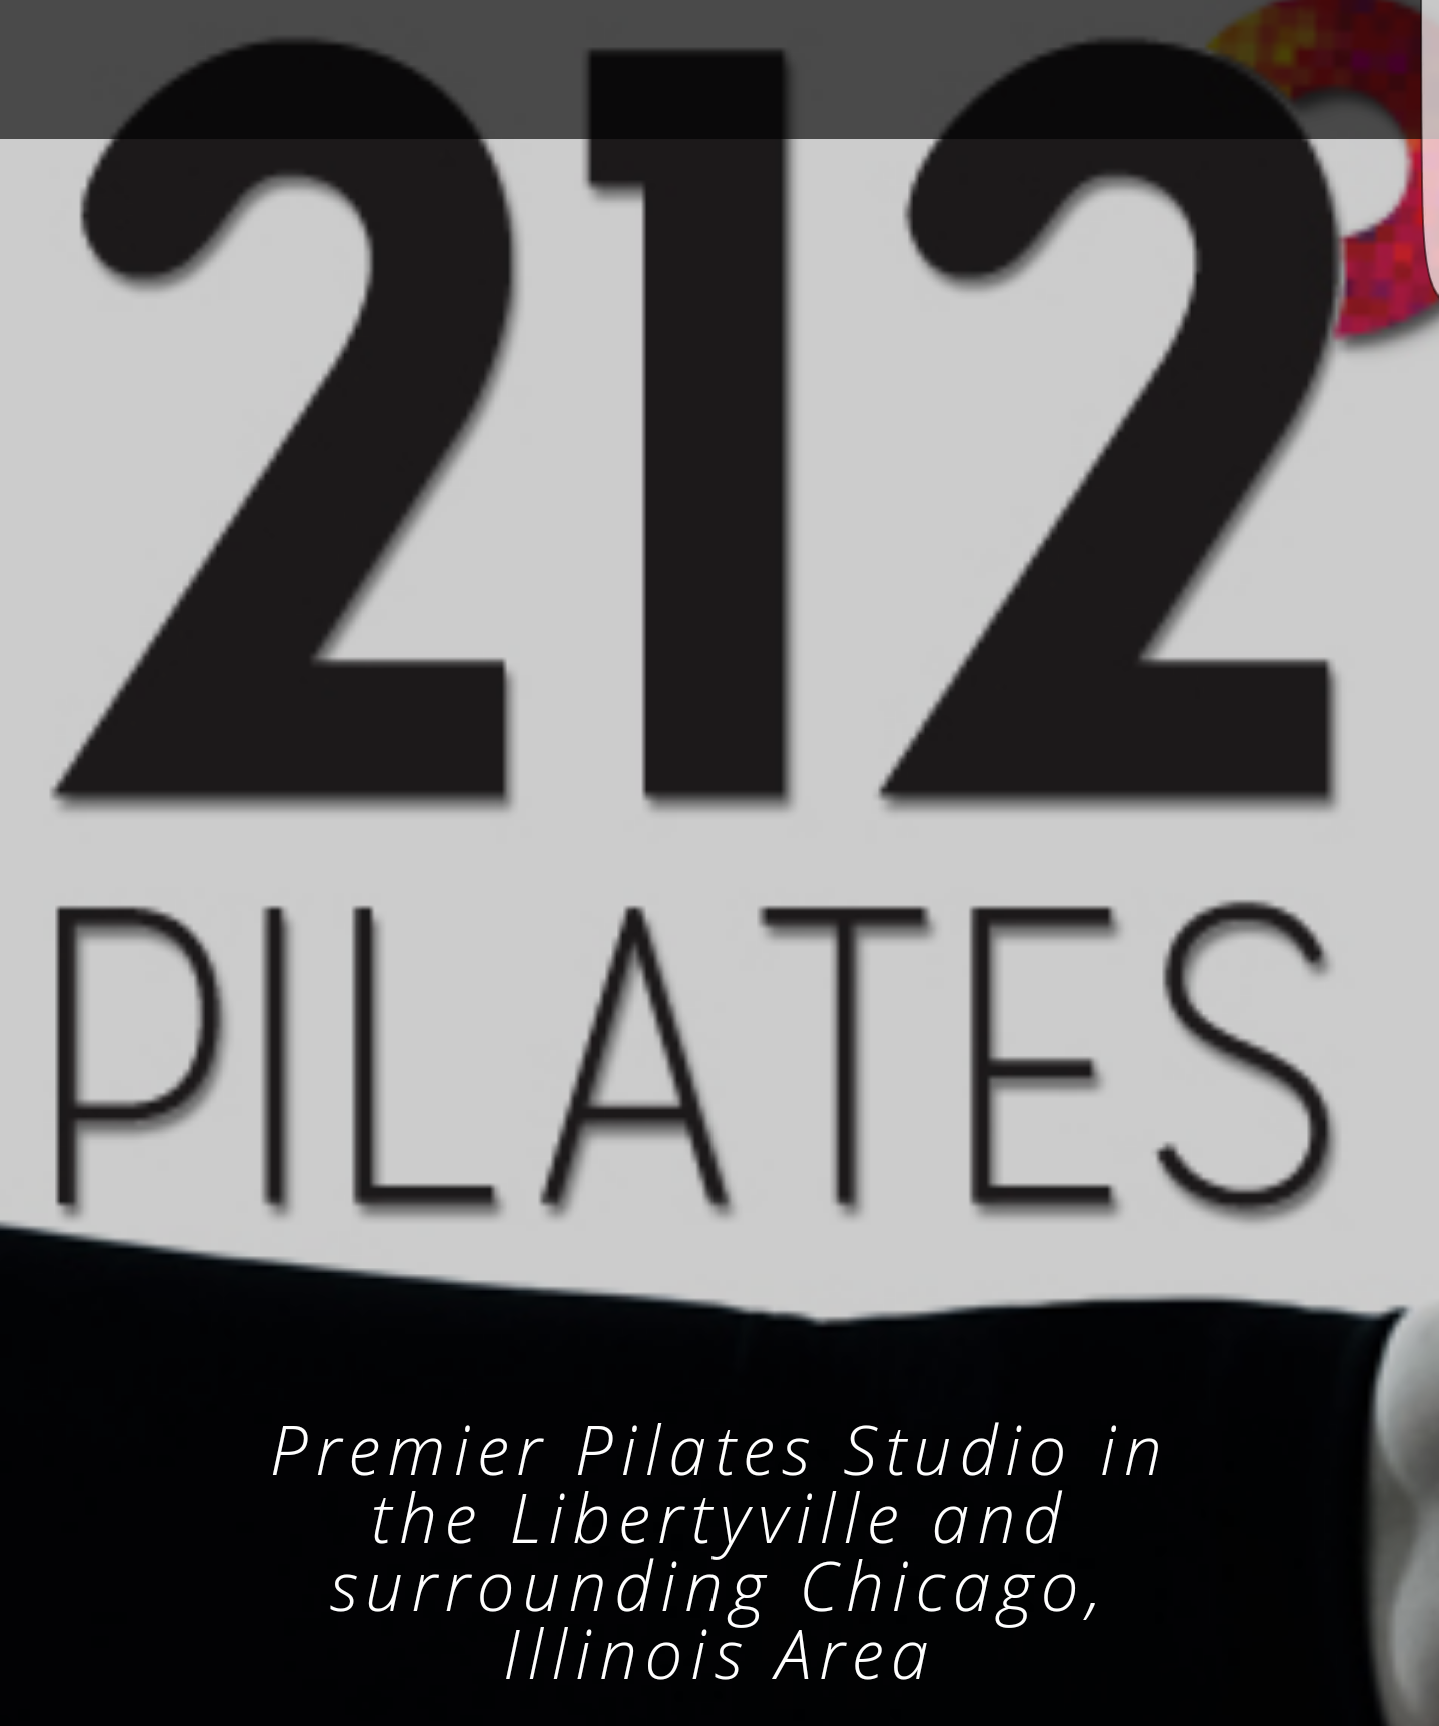 Pilates 212